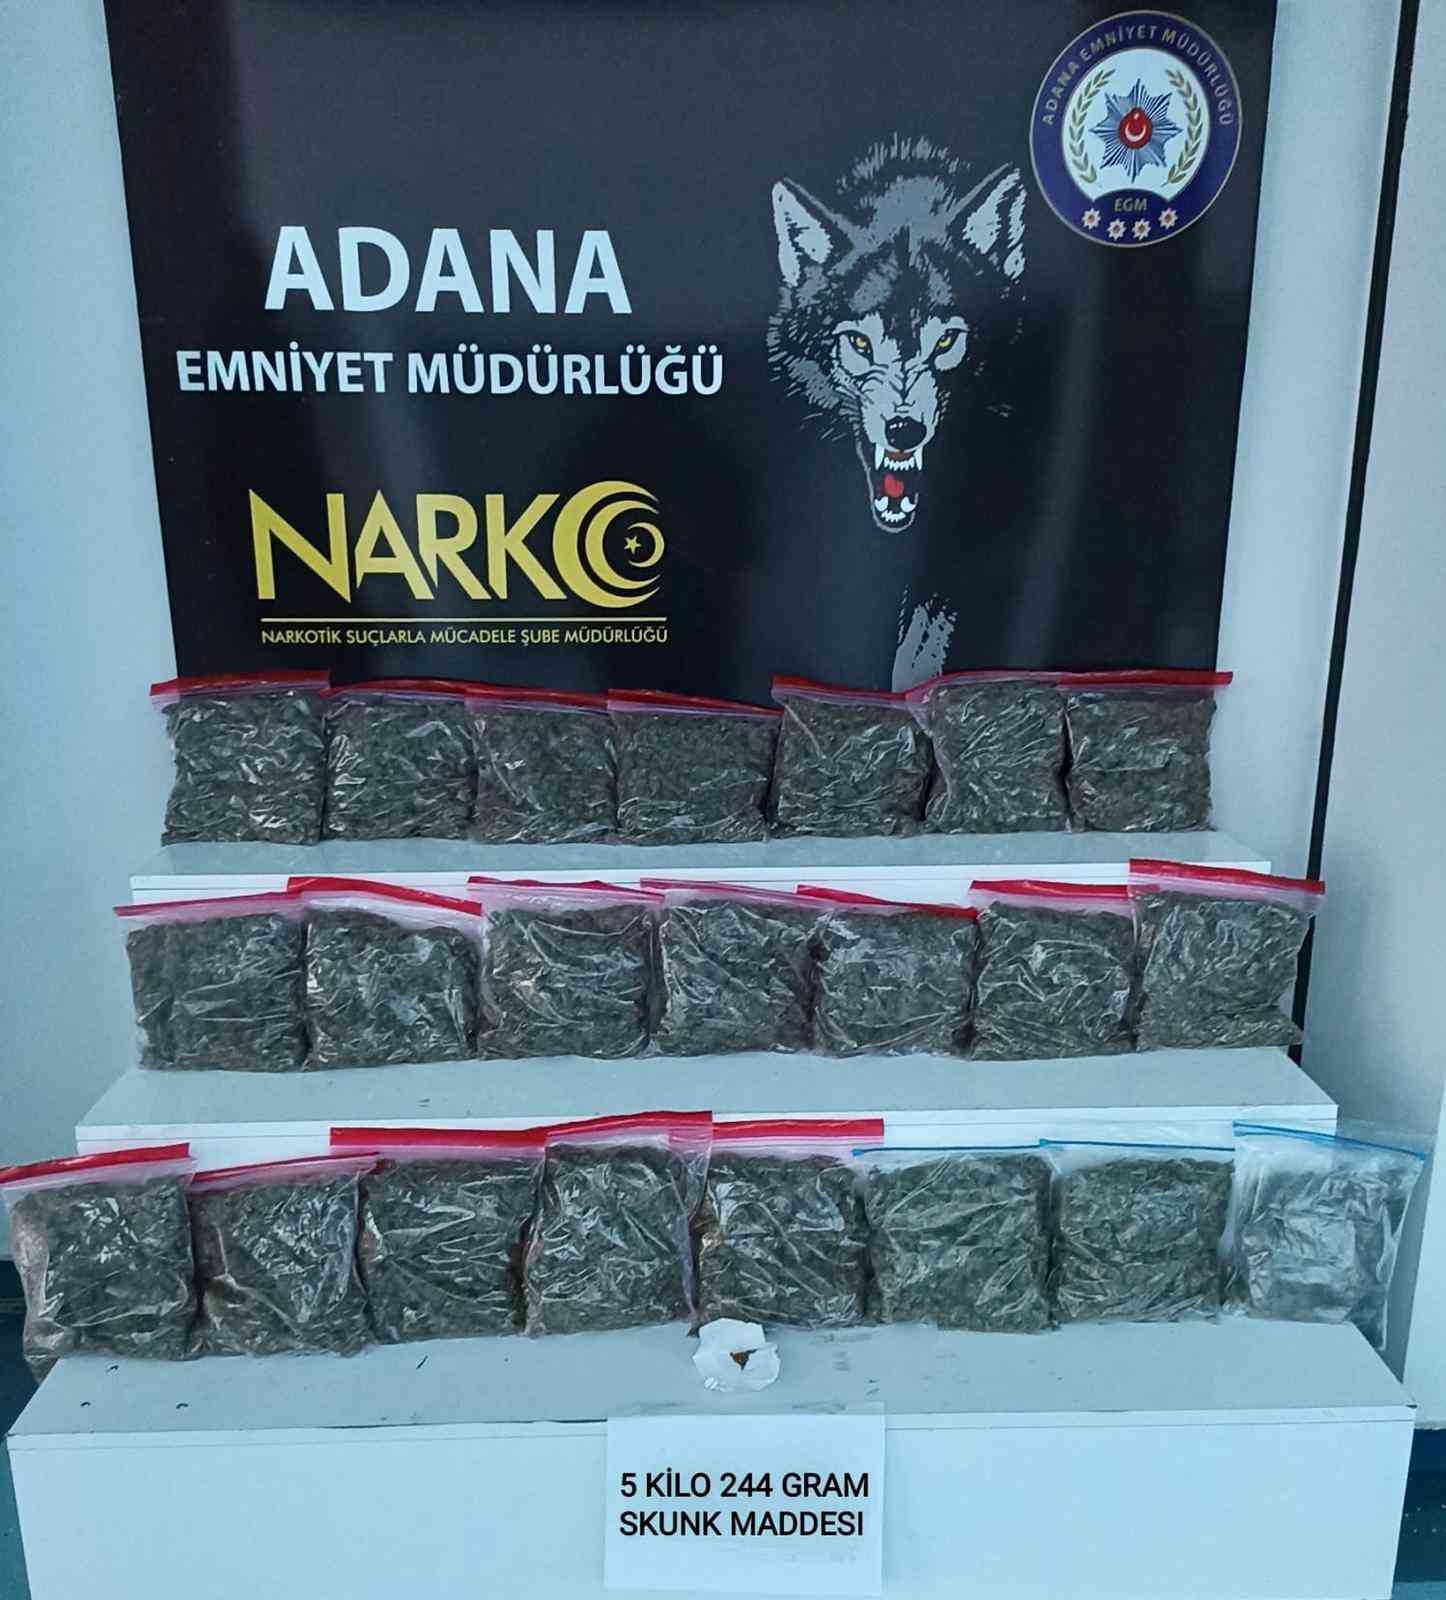 Adana’da 5 kilo 244 gram skunk ele geçirildi #adana